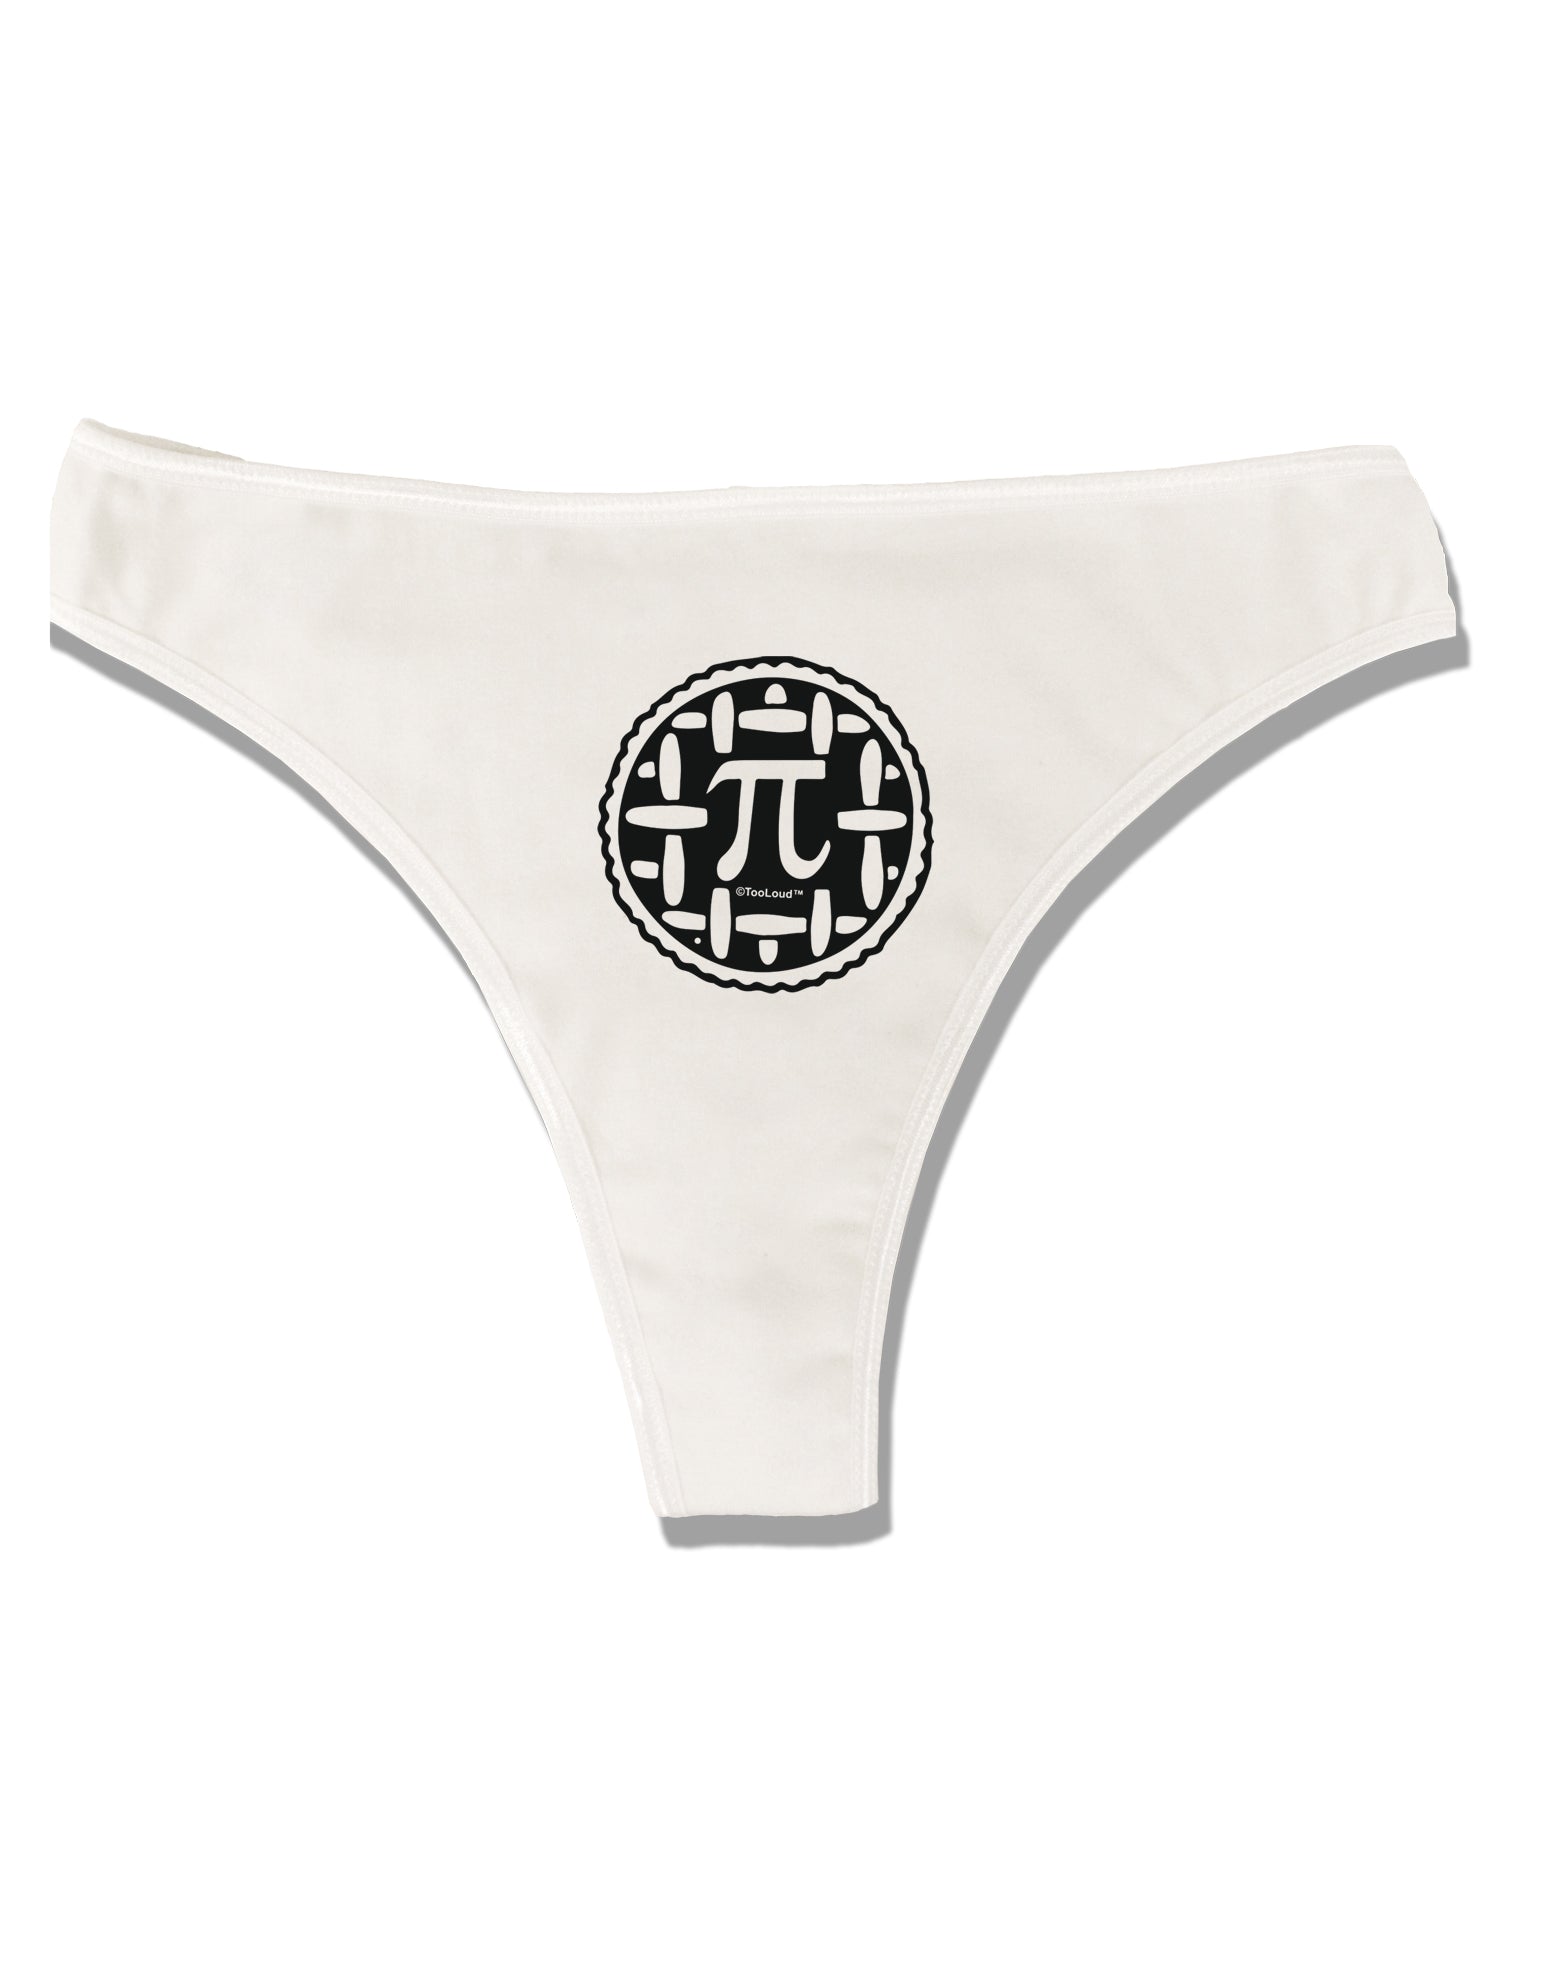 Eggnog Me Womens Thong Underwear White XS Tooloud - Davson Sales